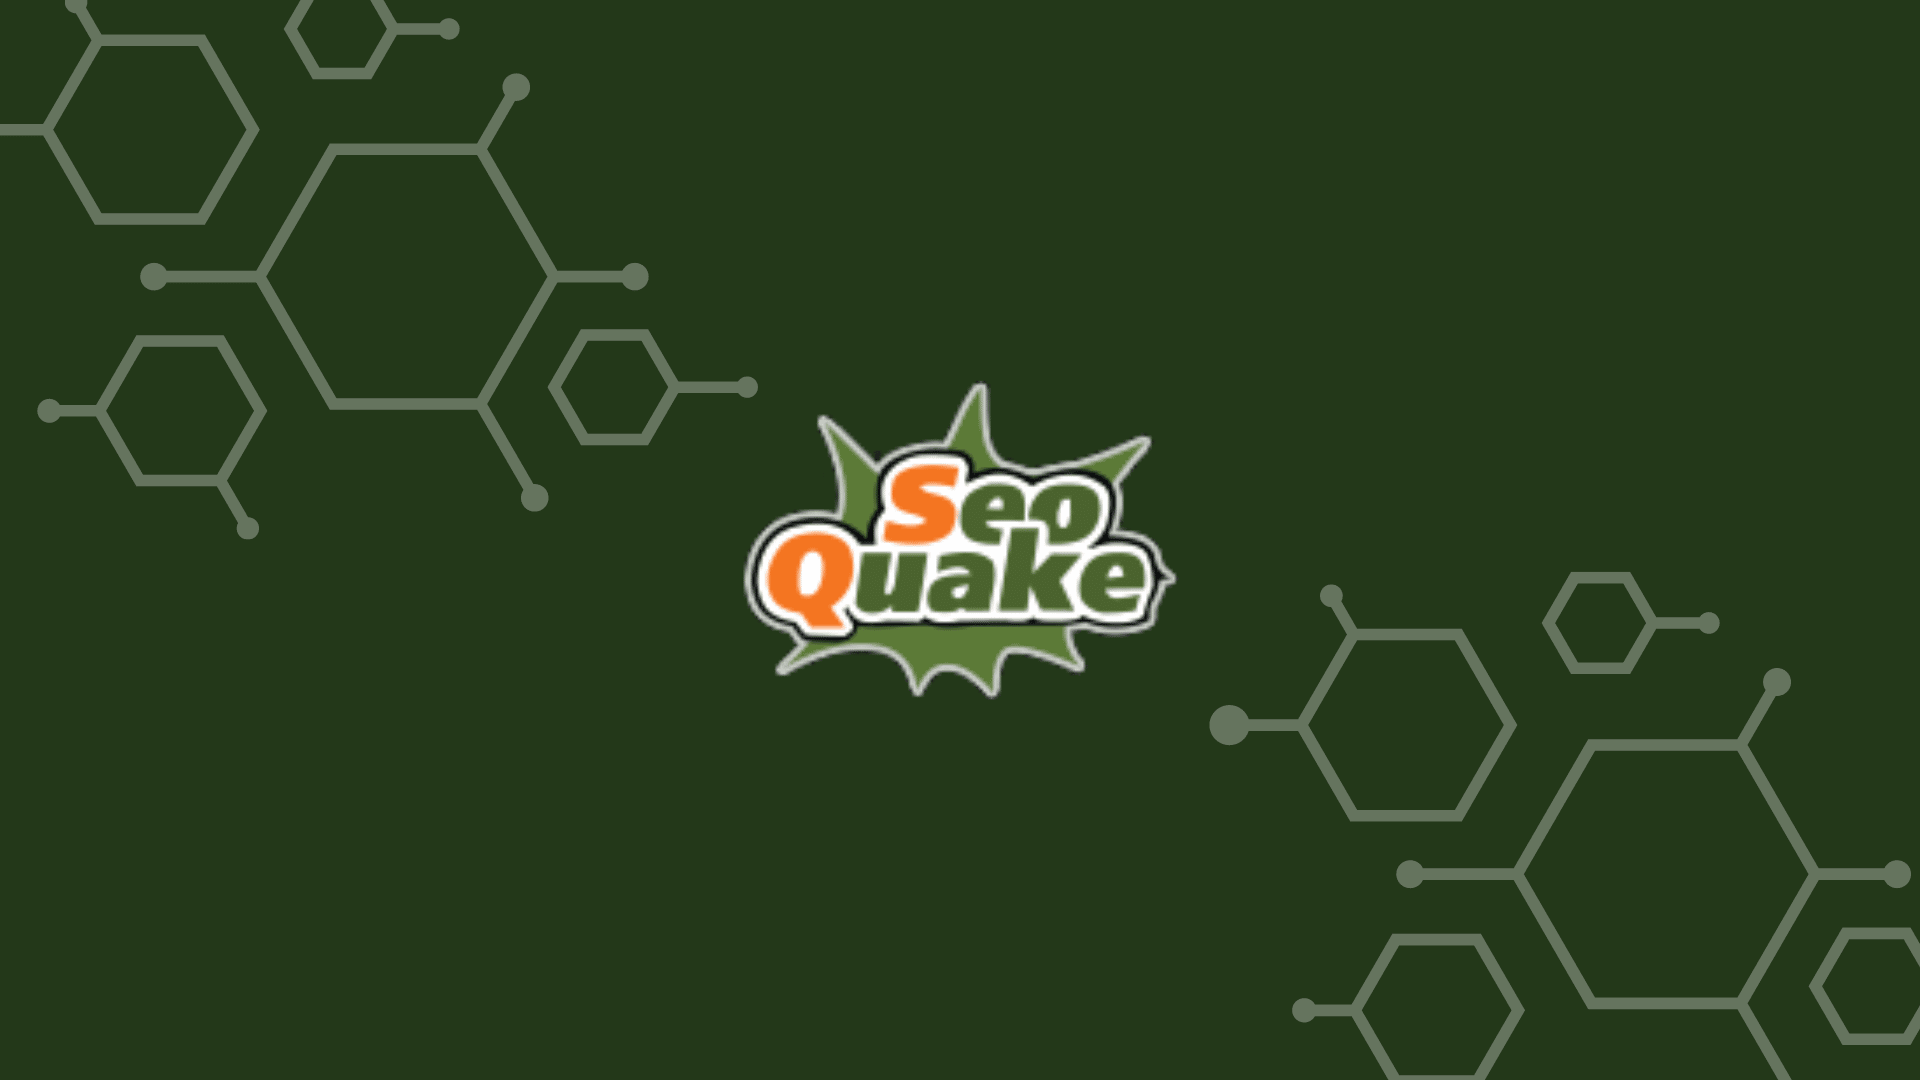 SEOquake Logo